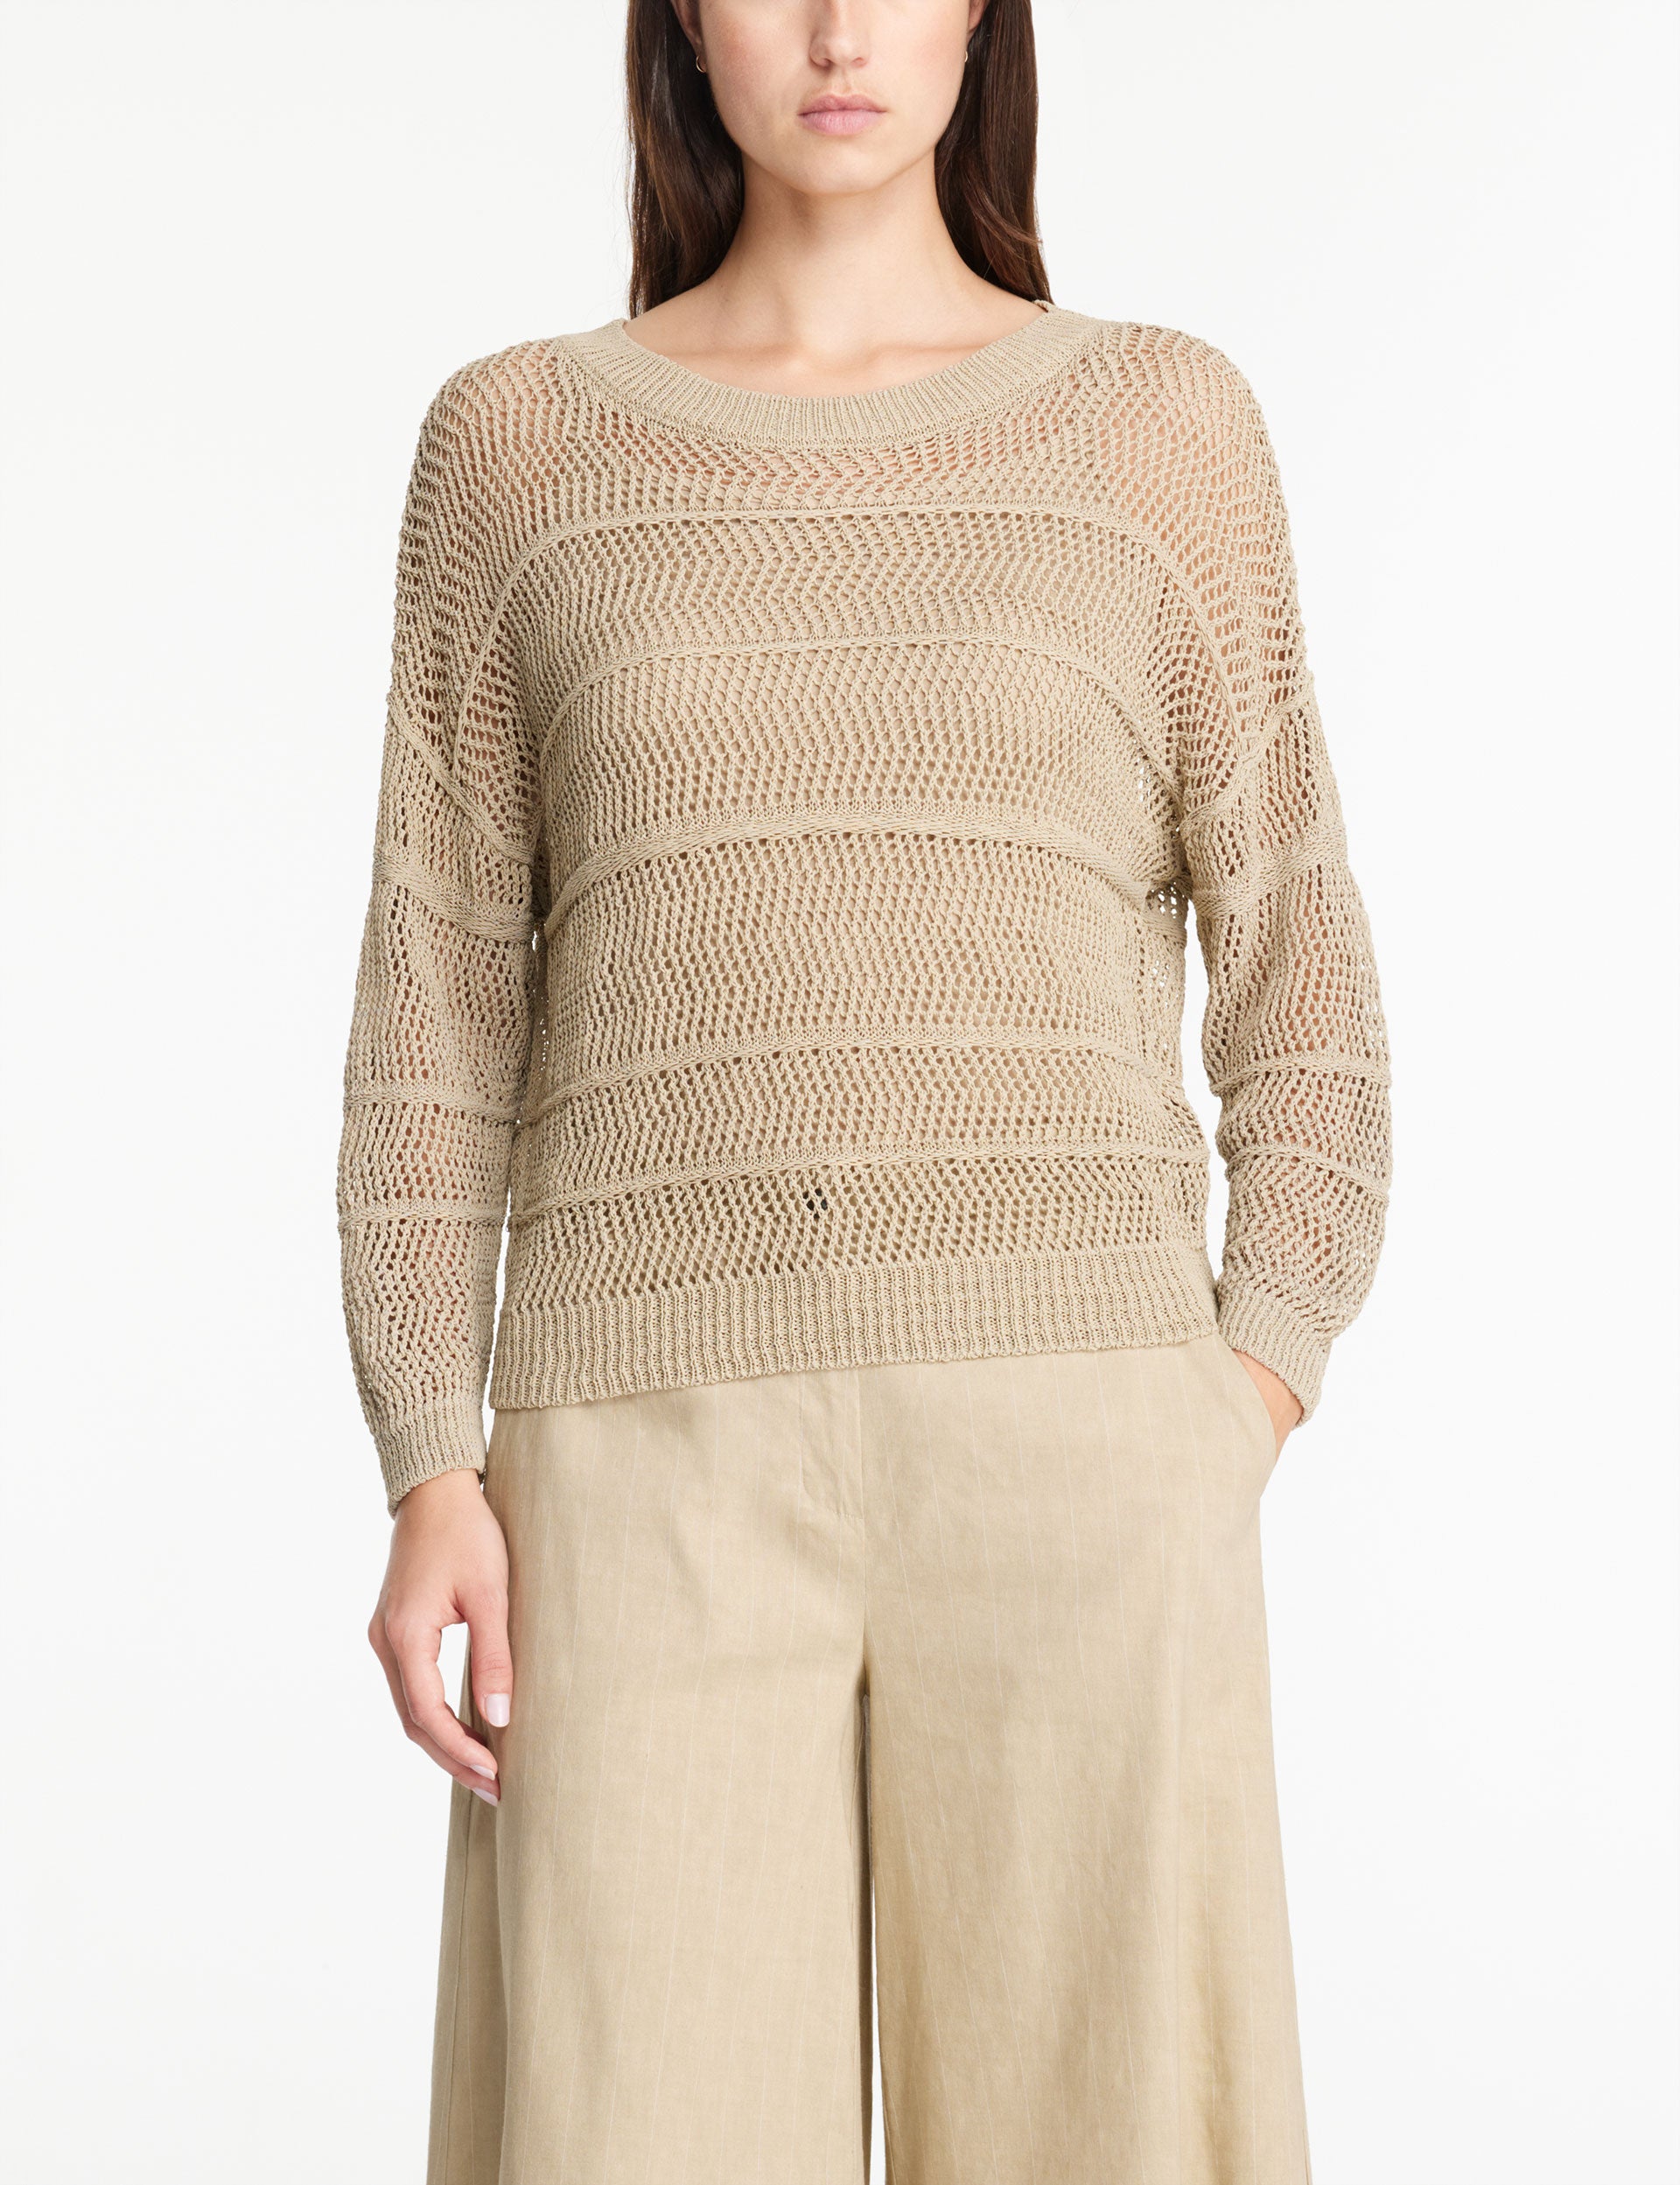 Sarah Pacini Mesh Sweater long sleeve